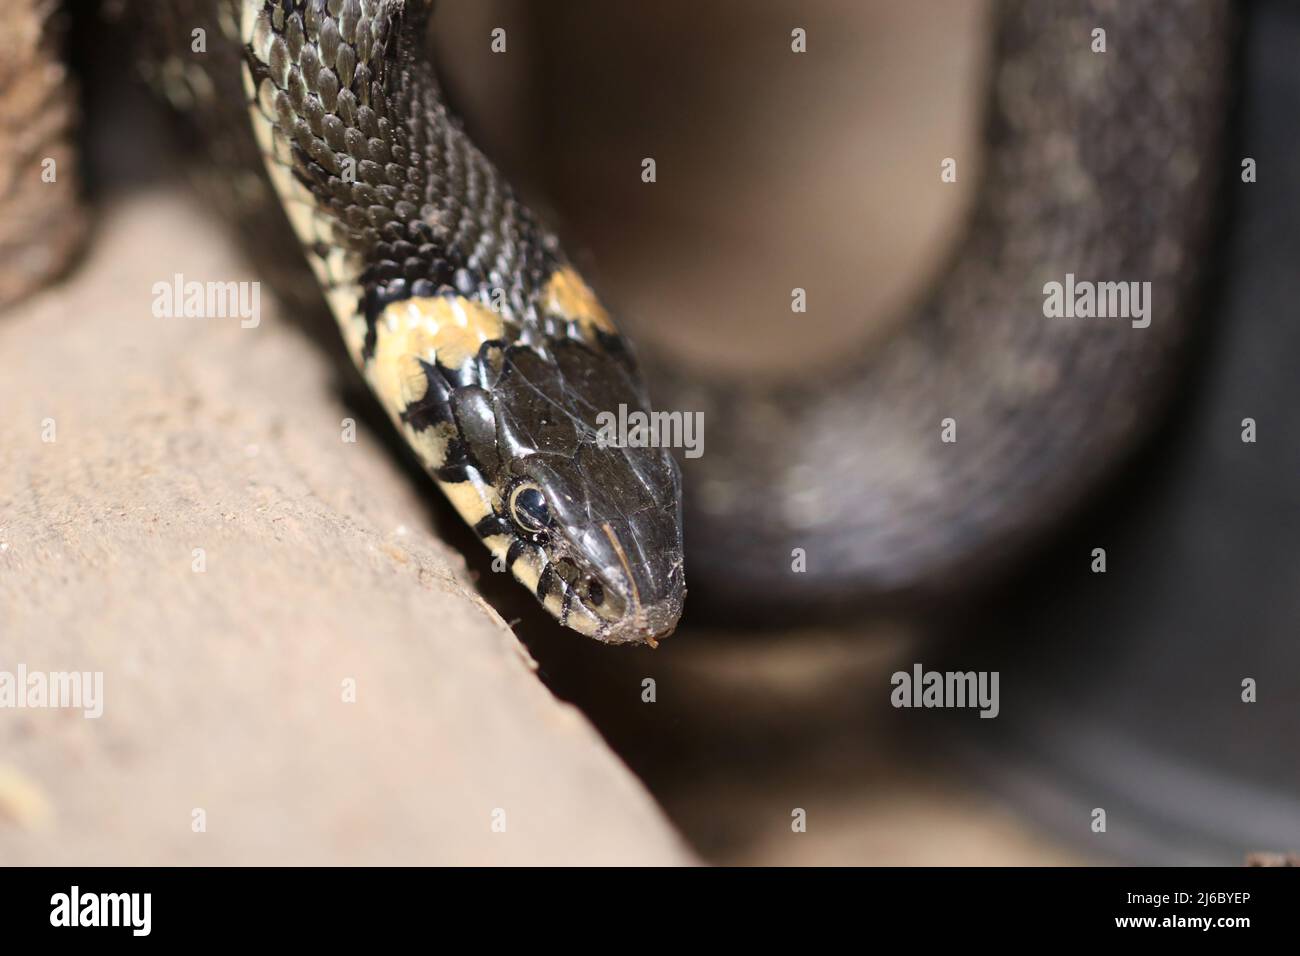 Waking up Grass Snake after winter hibernation. Selective focus. Stock Photo